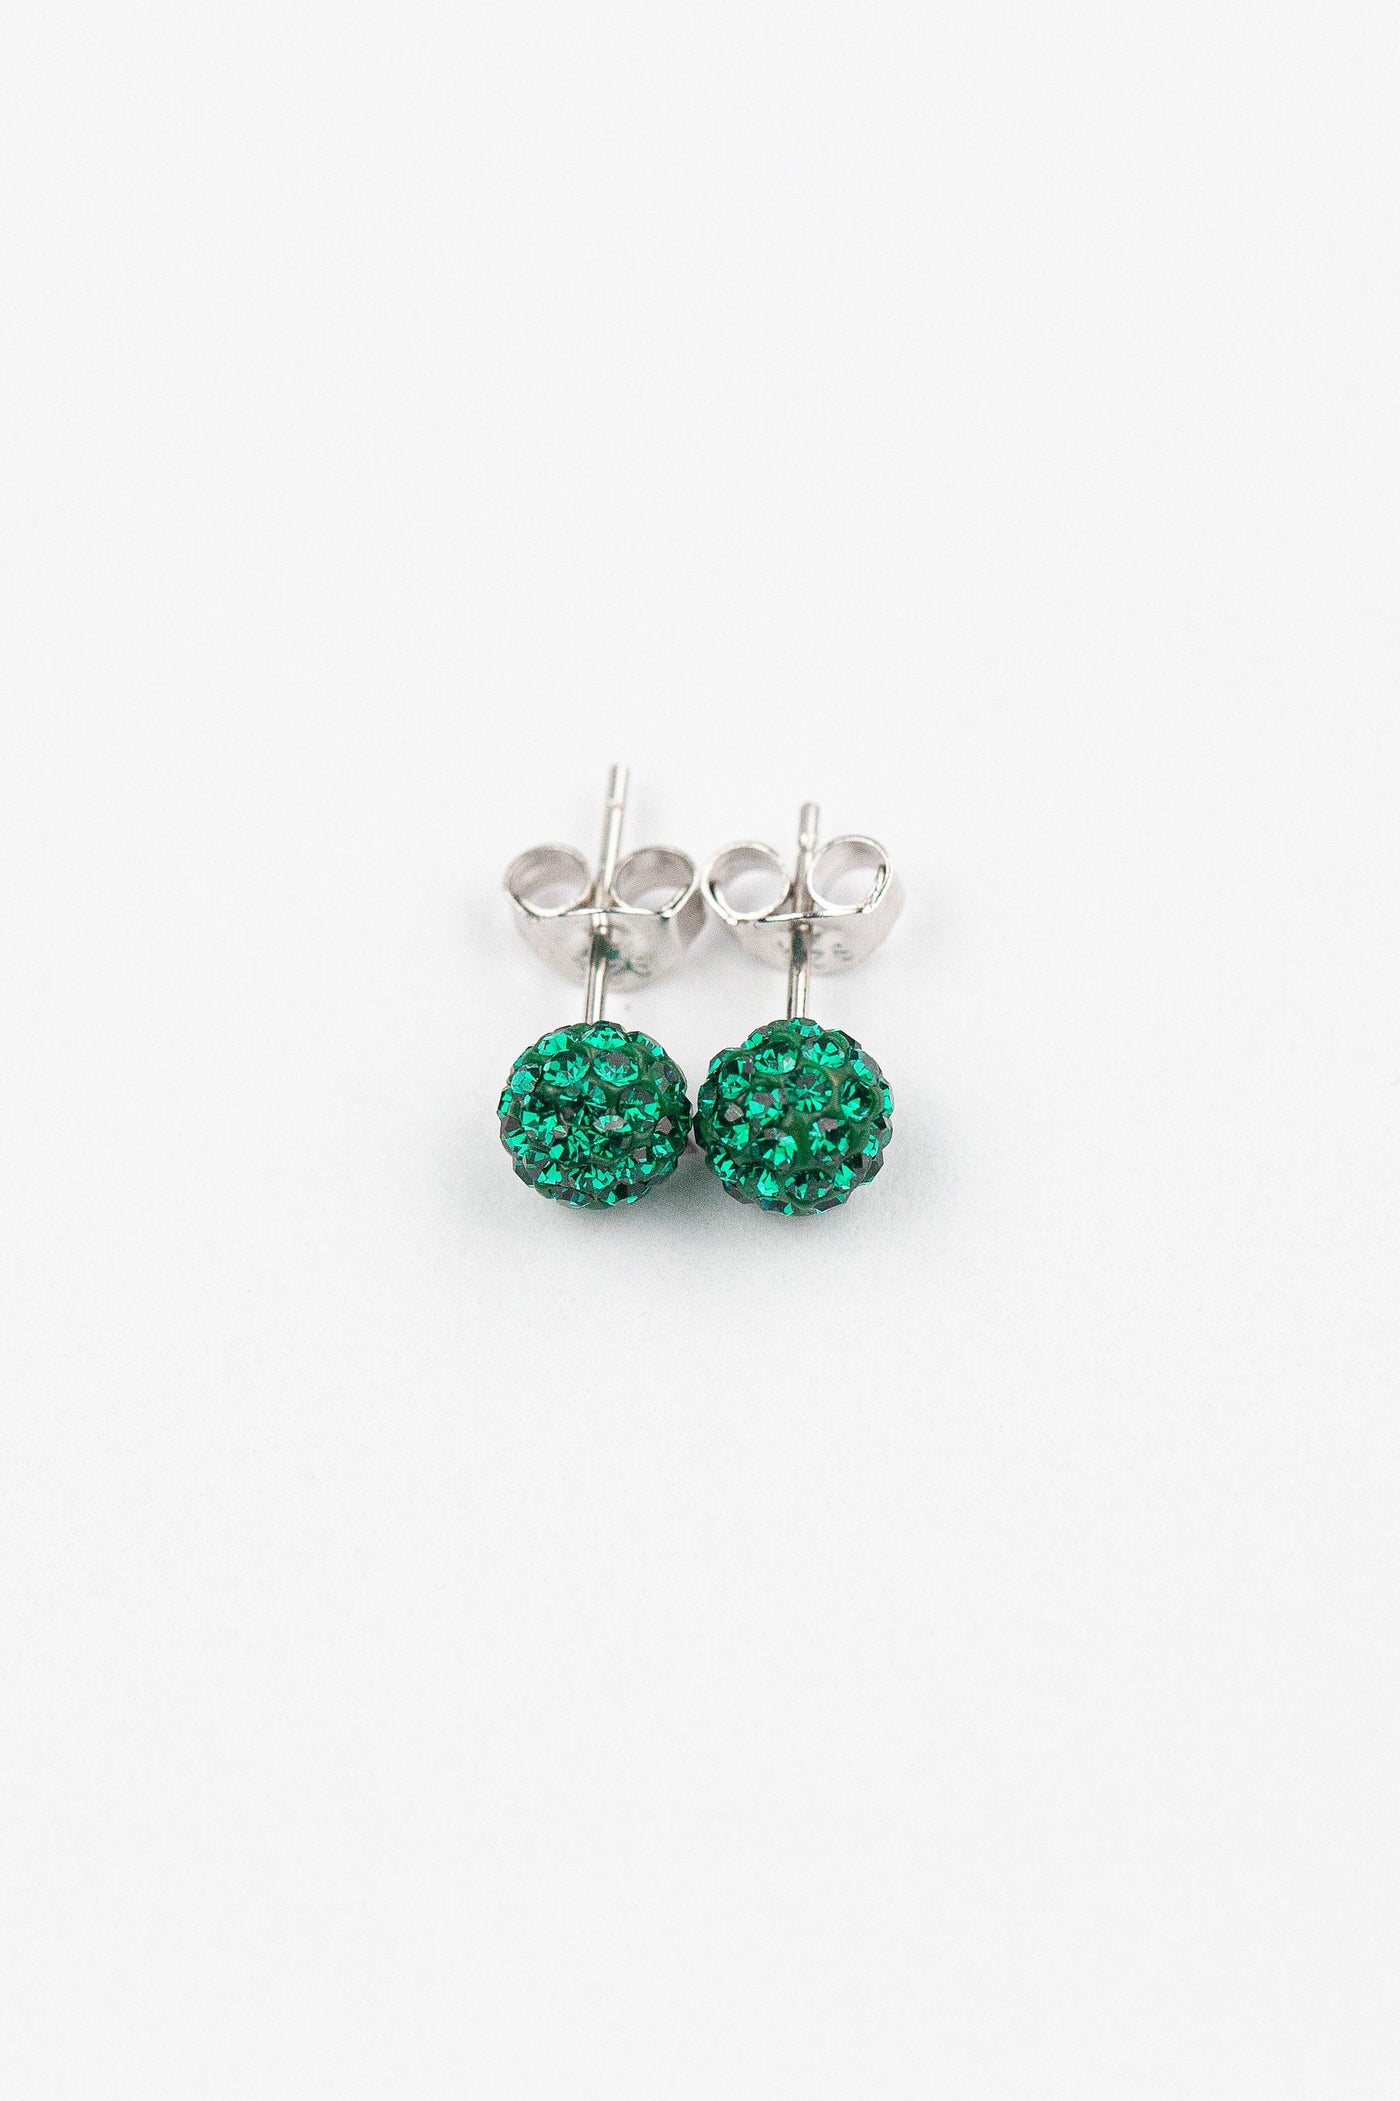 6mm Disco Ball Stud Earrings in Emerald | Annie and Sisters | sister stud earrings, for kids, children's jewelry, kid's jewelry, best friend